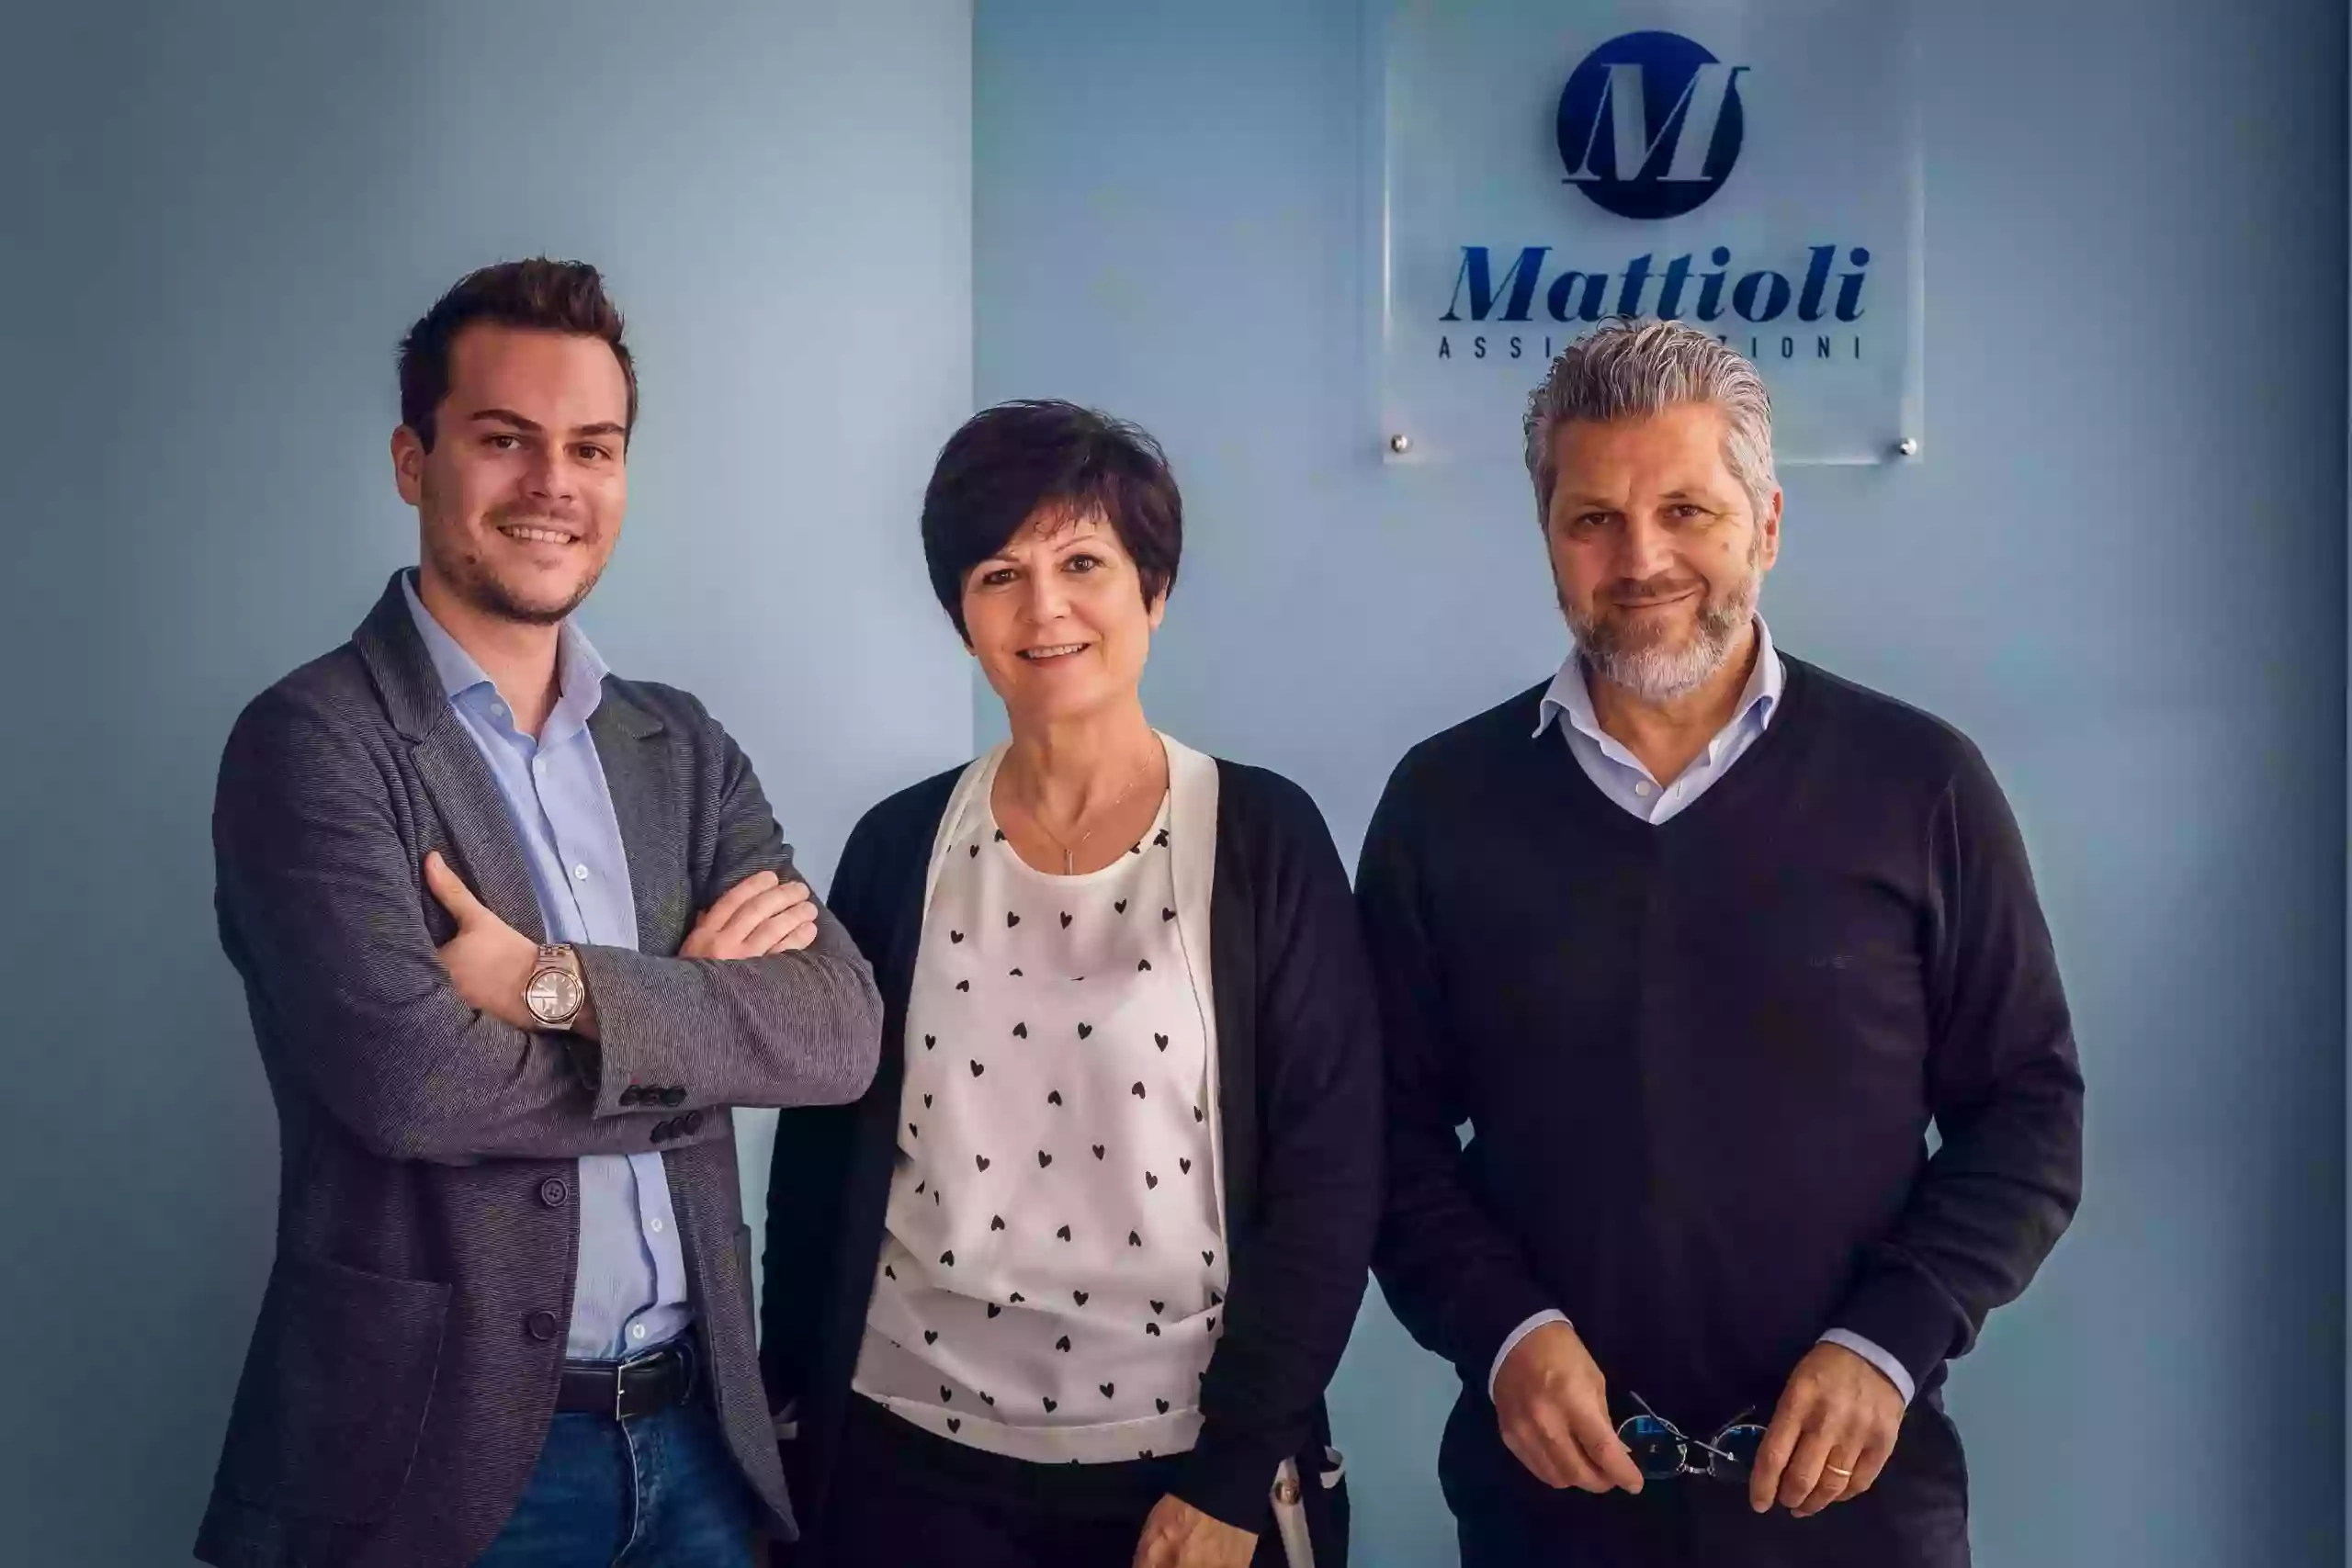 Mattioli Assicurazioni - Helvetia - Europ Assistance